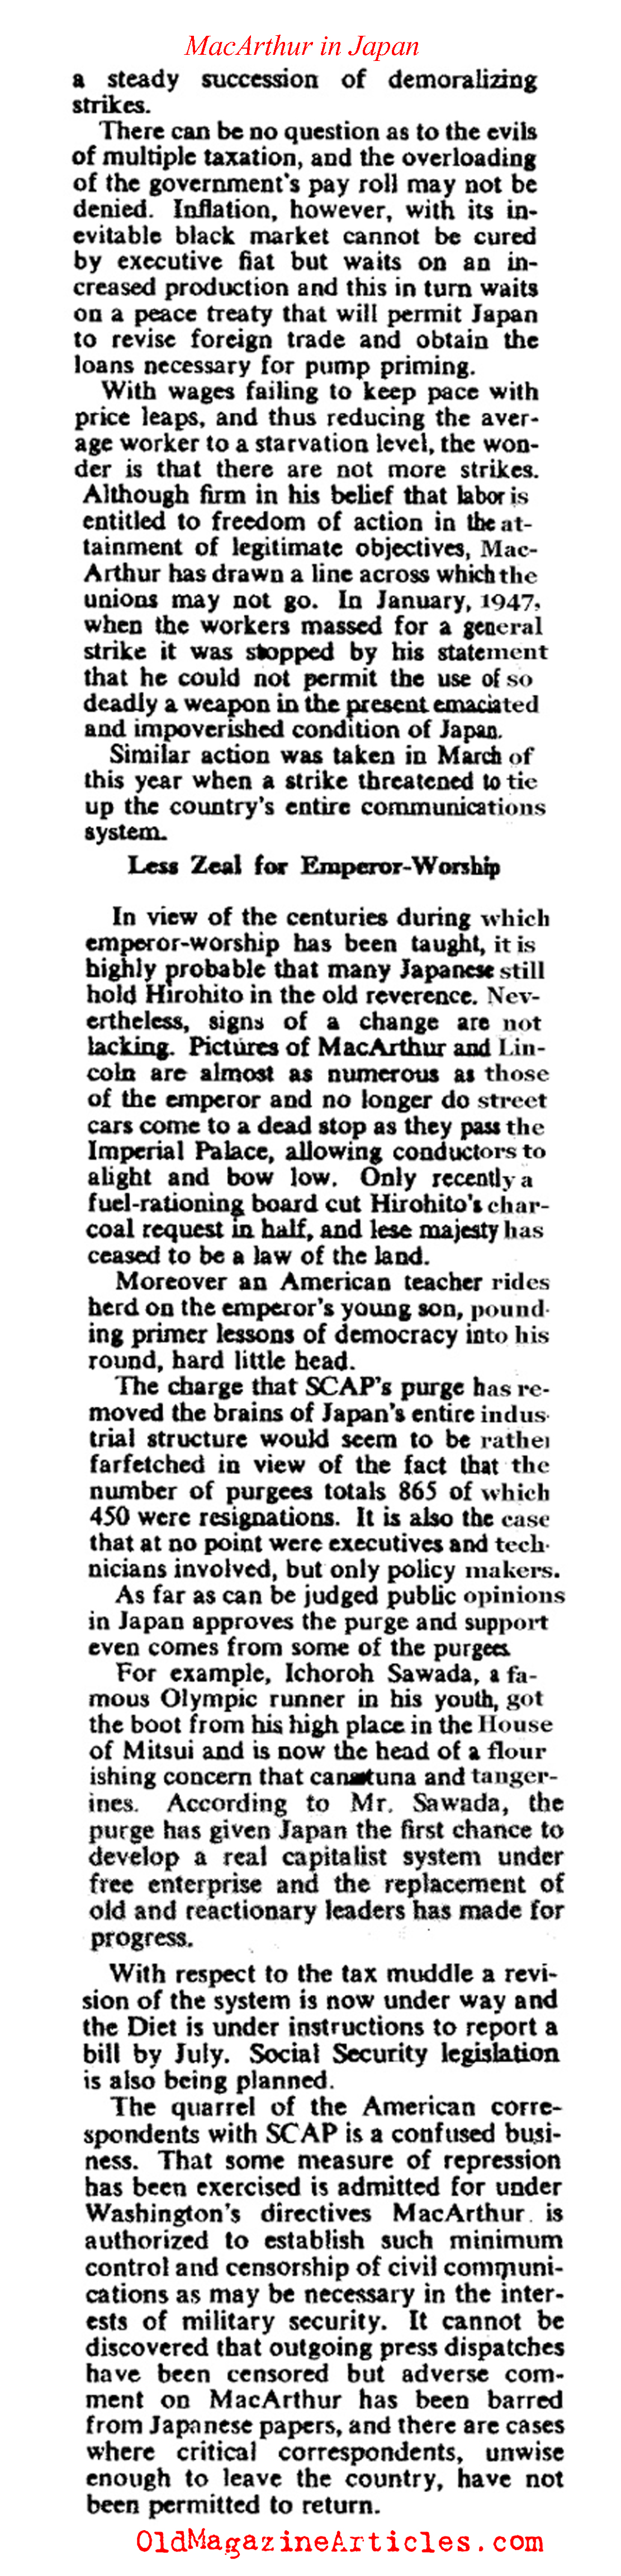 The Stewardship of General MacArthur (Collier's Magazine, 1948)